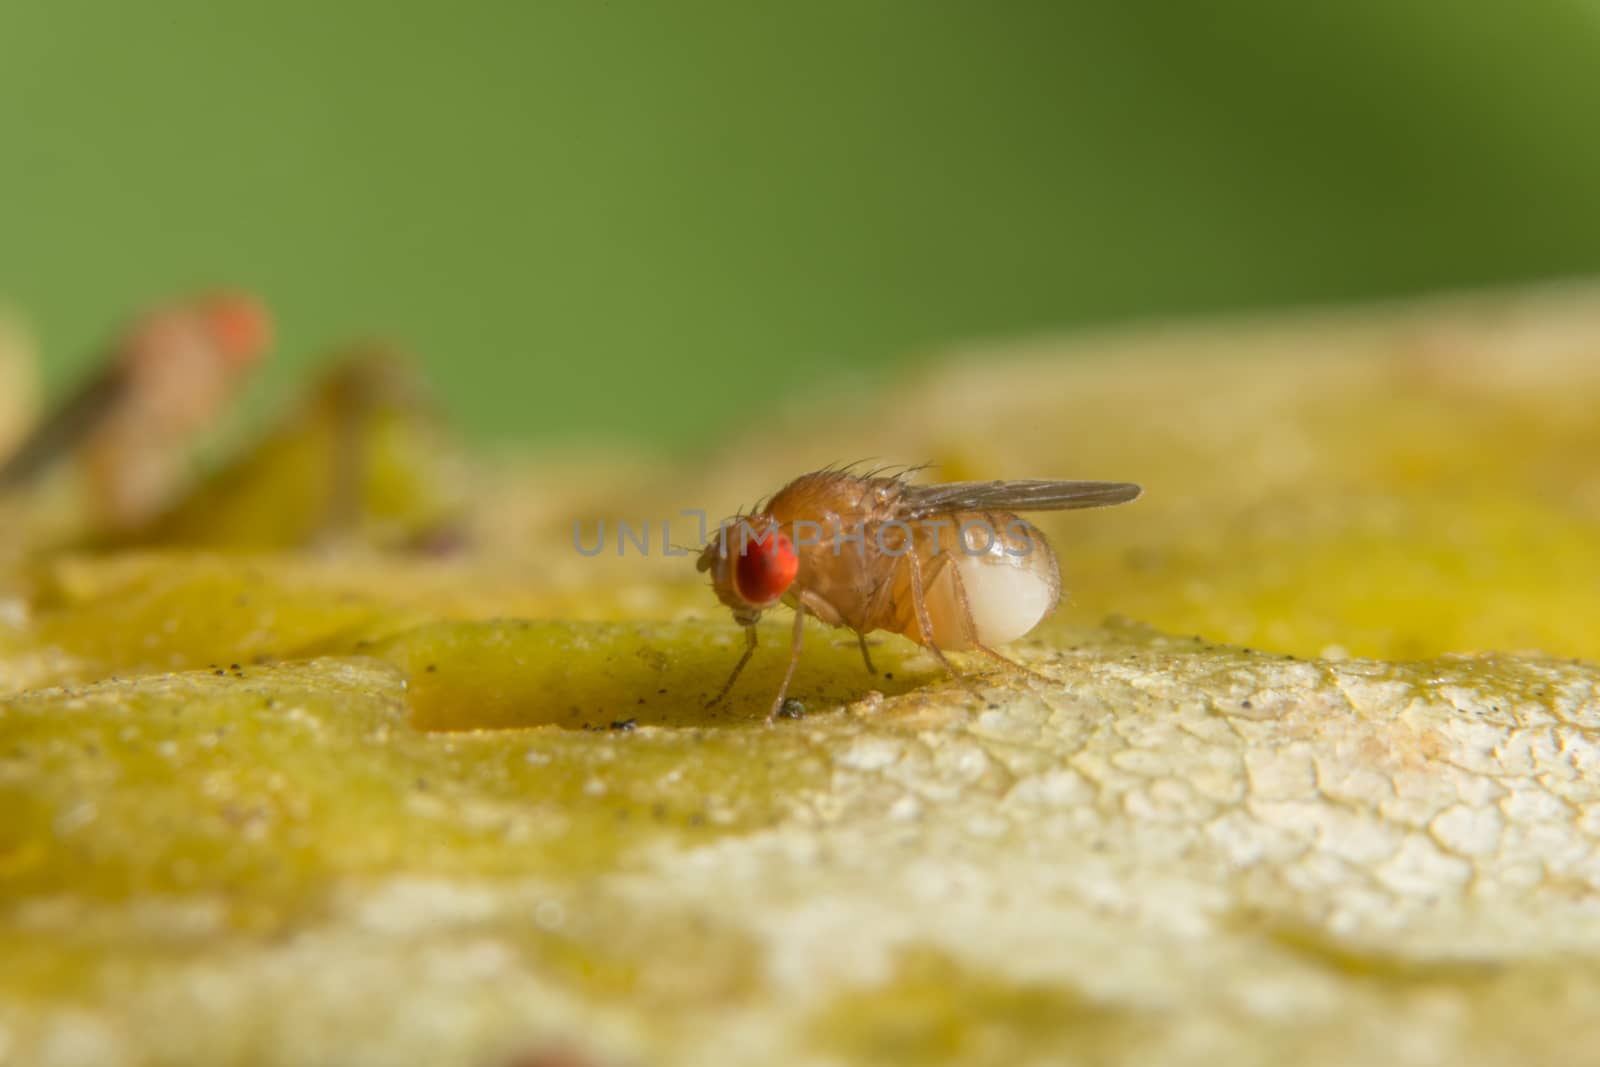 Drosophila macro is on the plant.